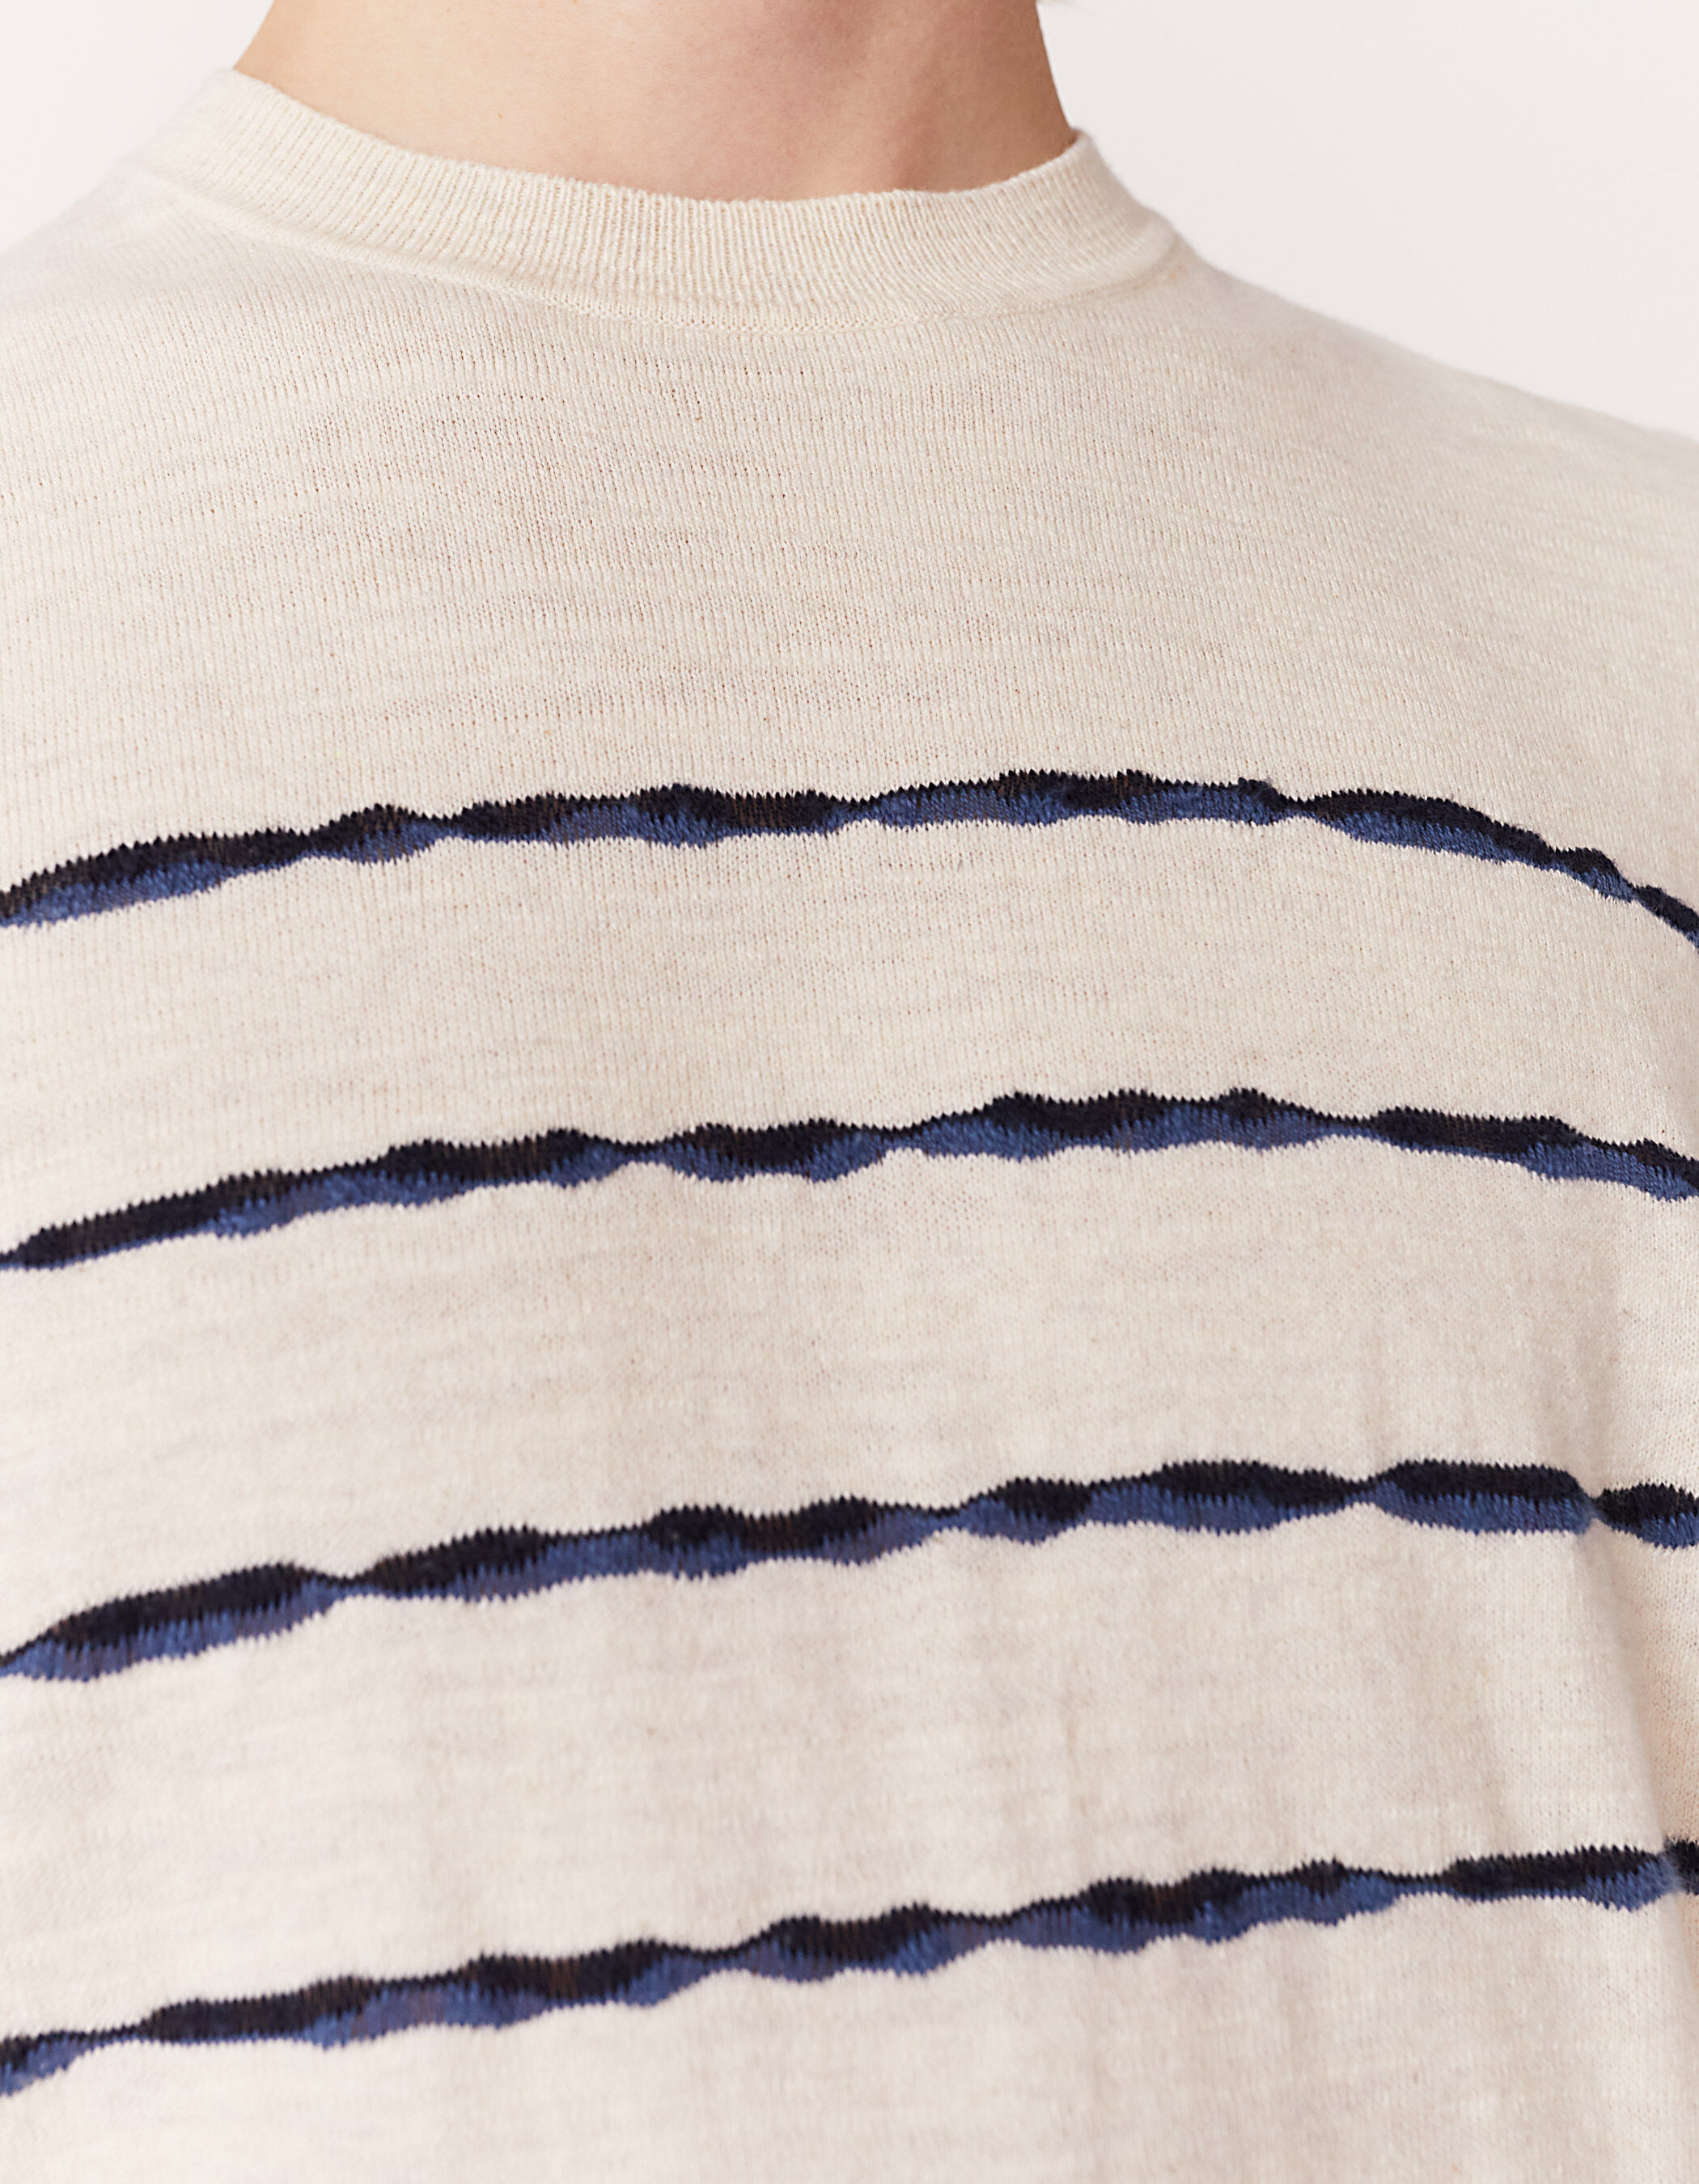 Men's beige sailor sweater with stone blue & black stripes